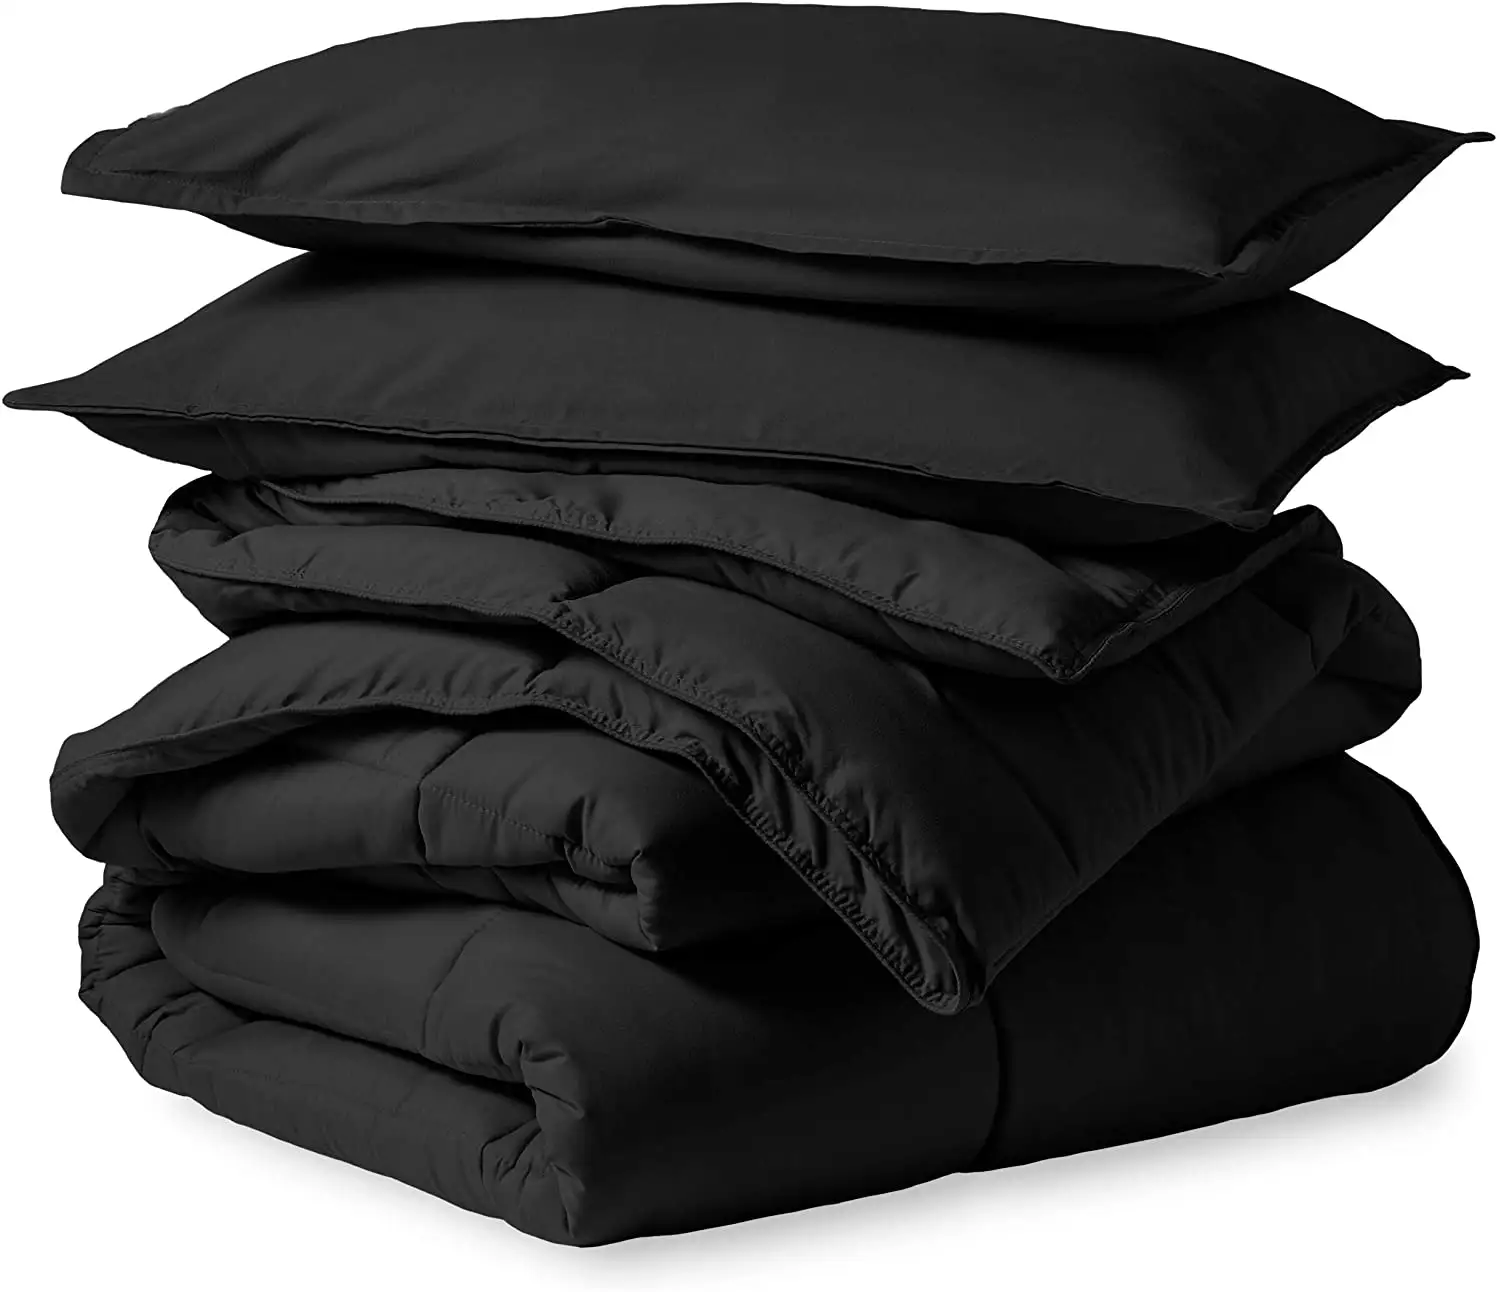 100% polyester microfiber solid color 3 piece quilted comforter set black